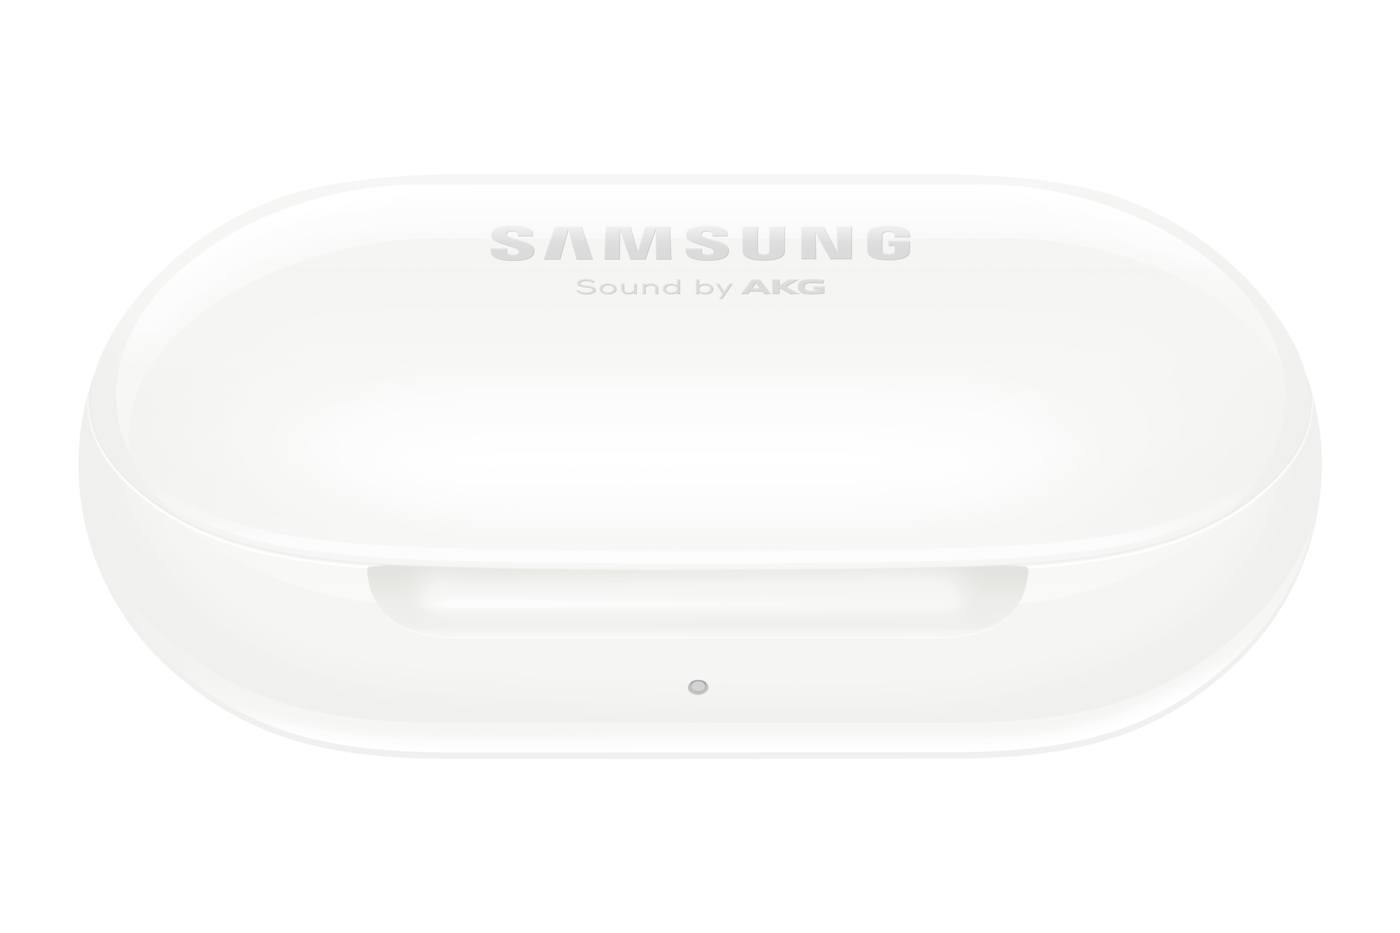 Combo Celular SAMSUNG Galaxy S20 128GB Azul + Buds Blanco